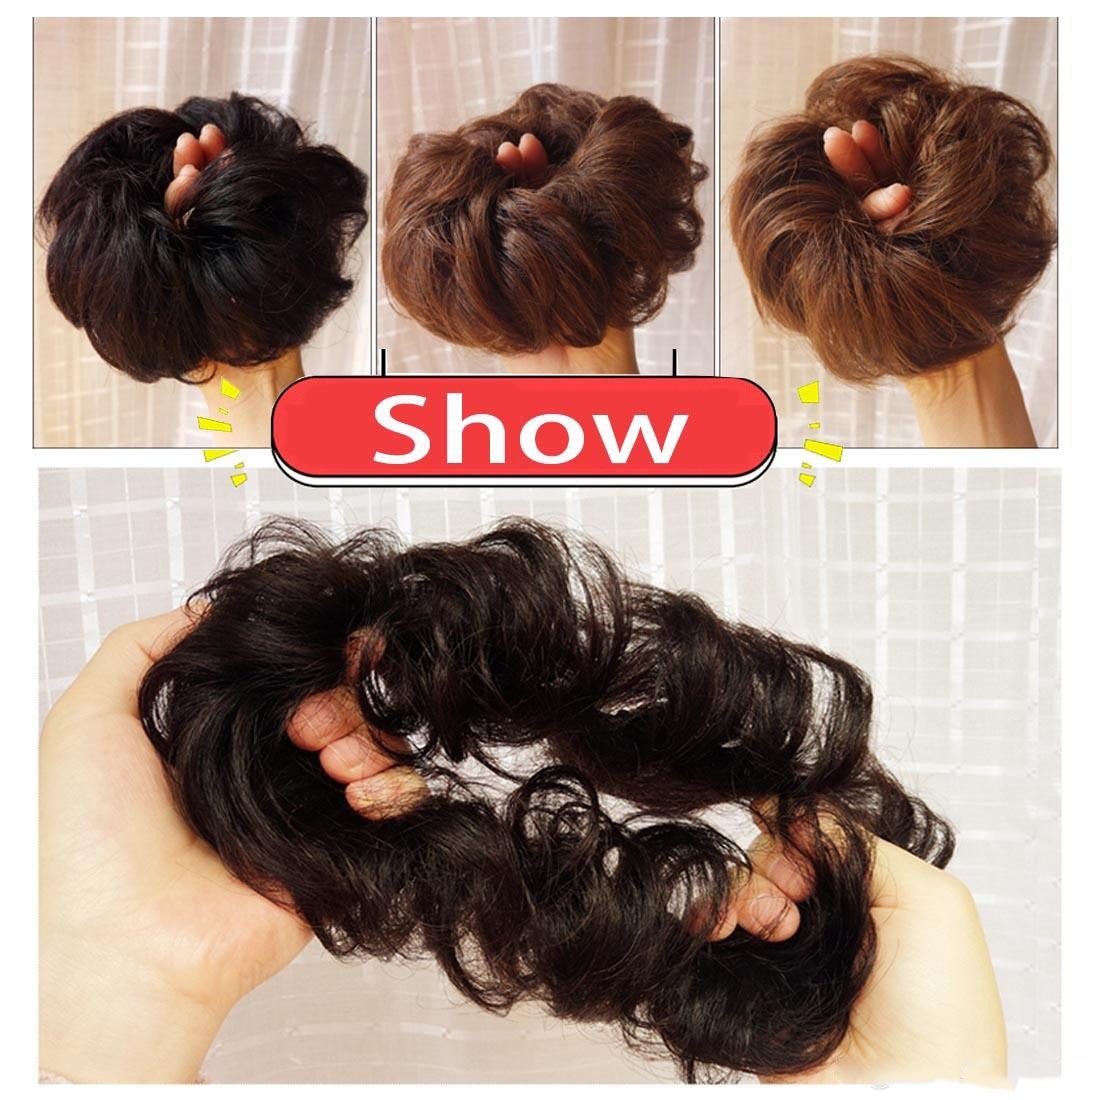 Wavy Human Hair Extensions - Women Curly Donut Hair